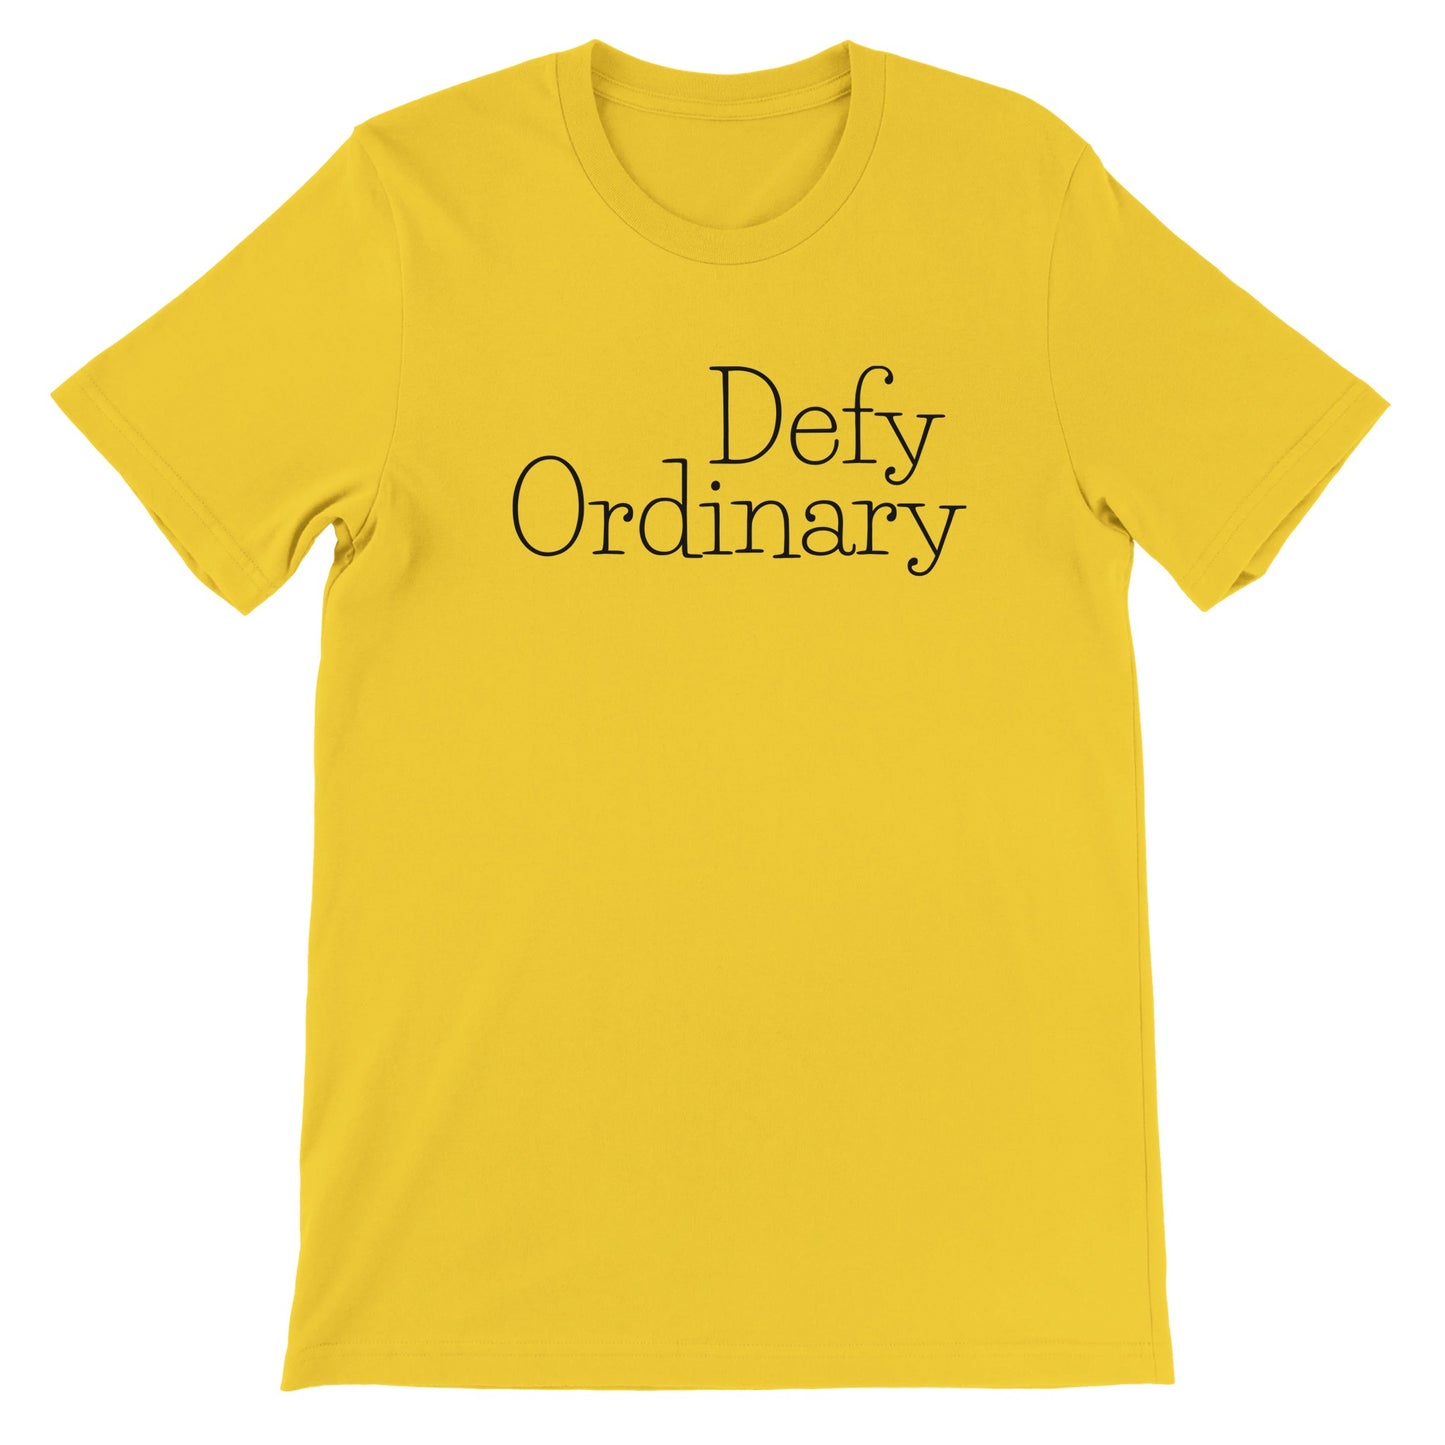 Defy Ordinary - Premium Unisex Crewneck T-shirt